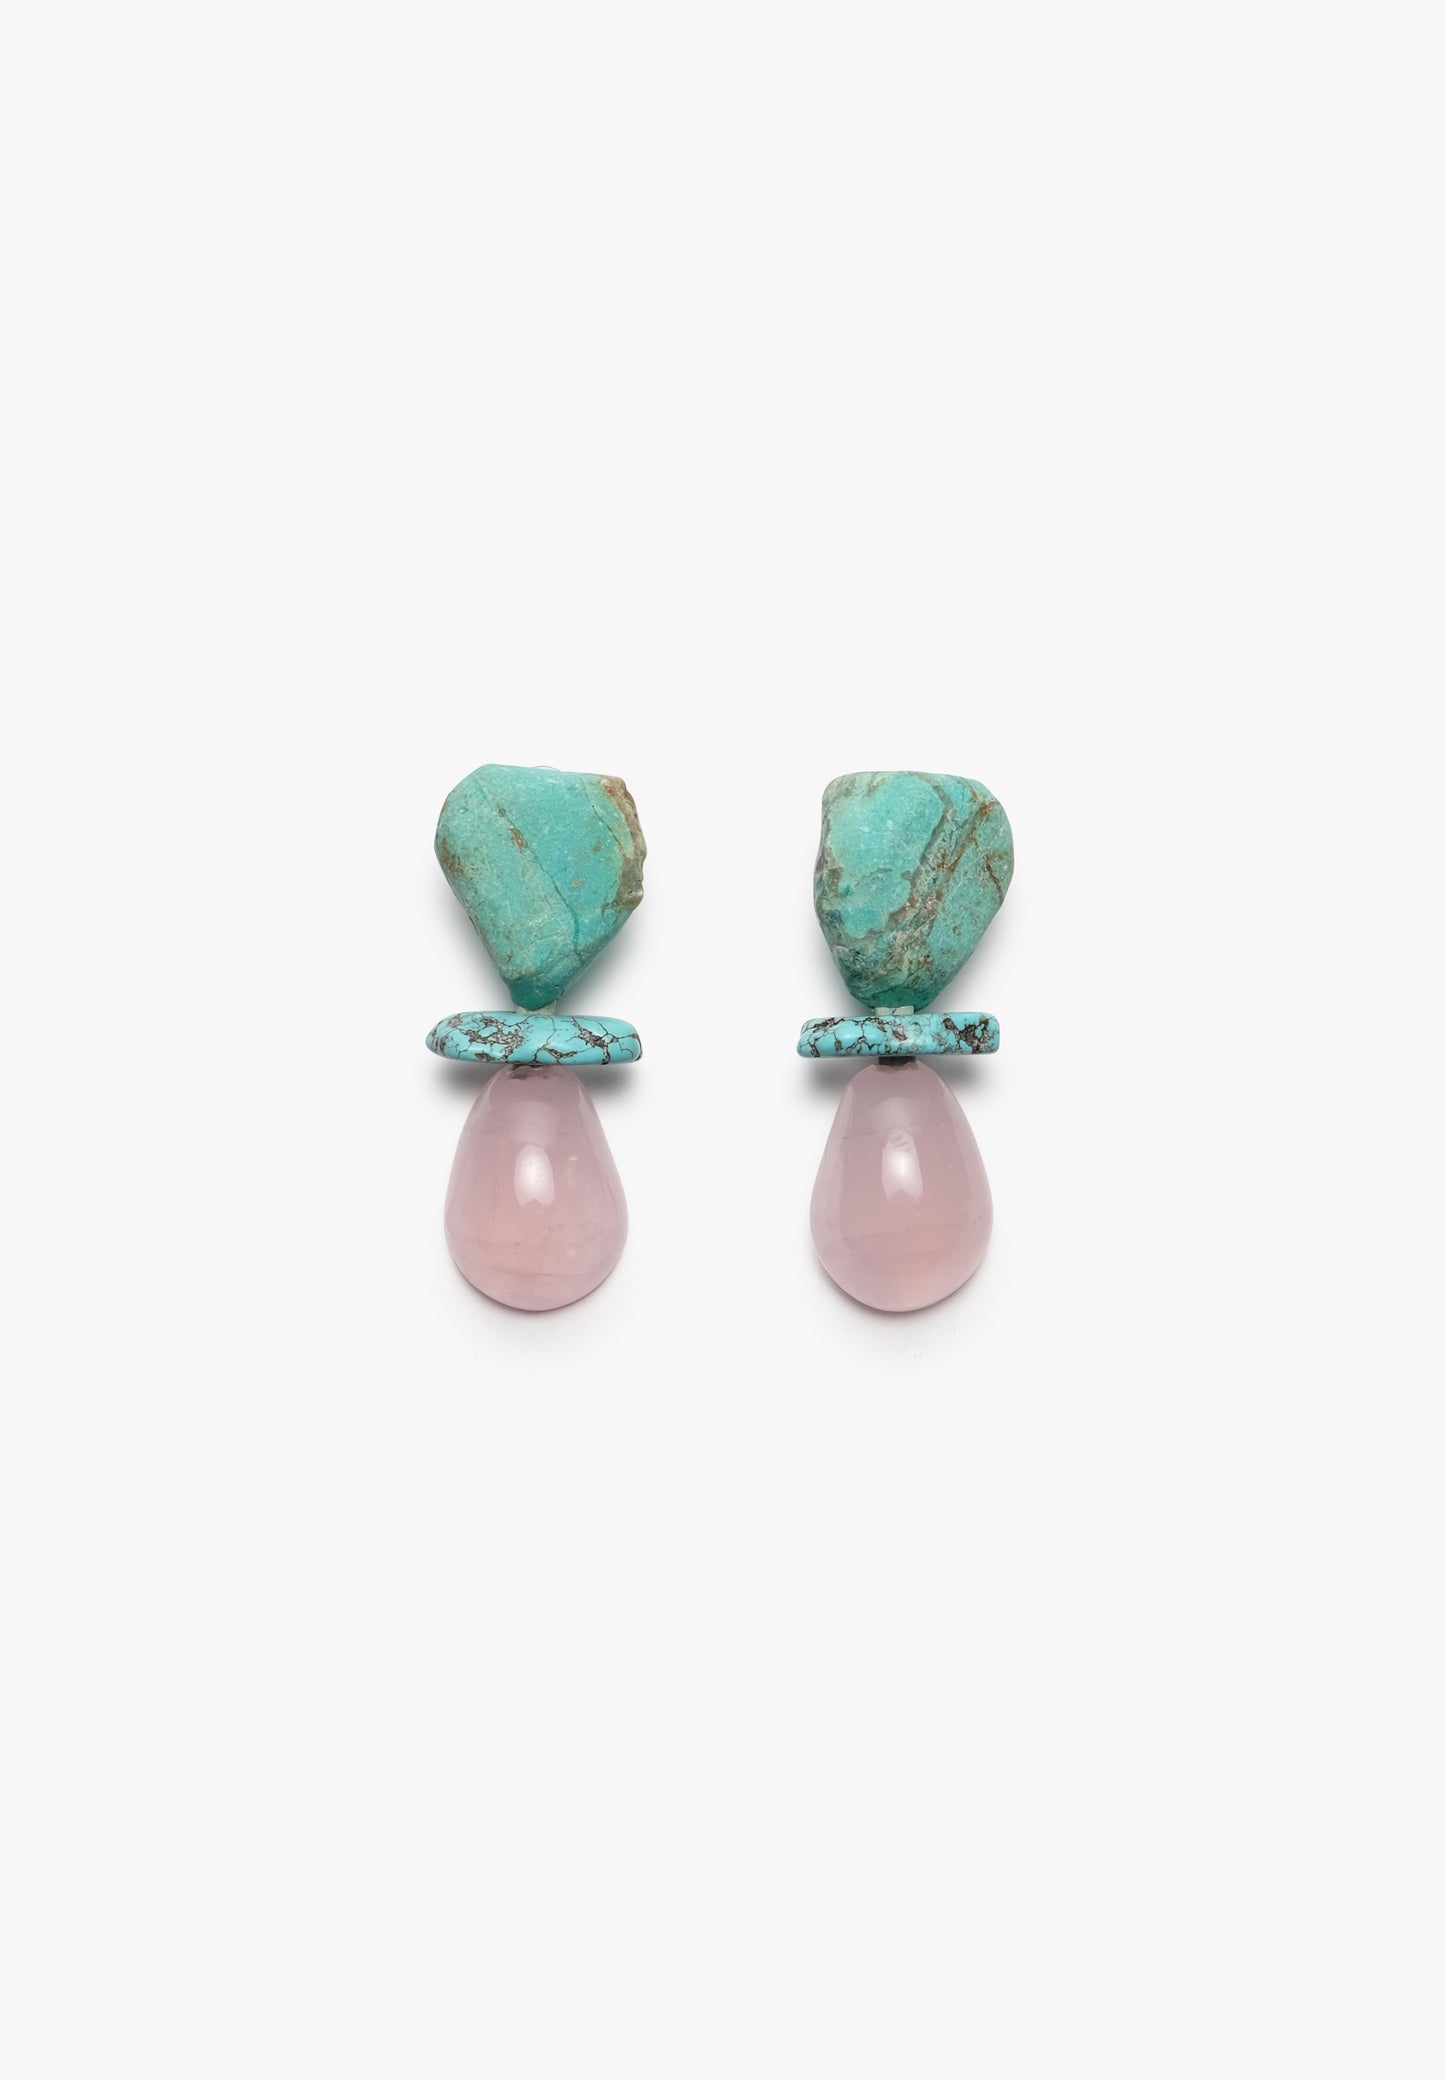 Earring: rose quartz and chrysocolla